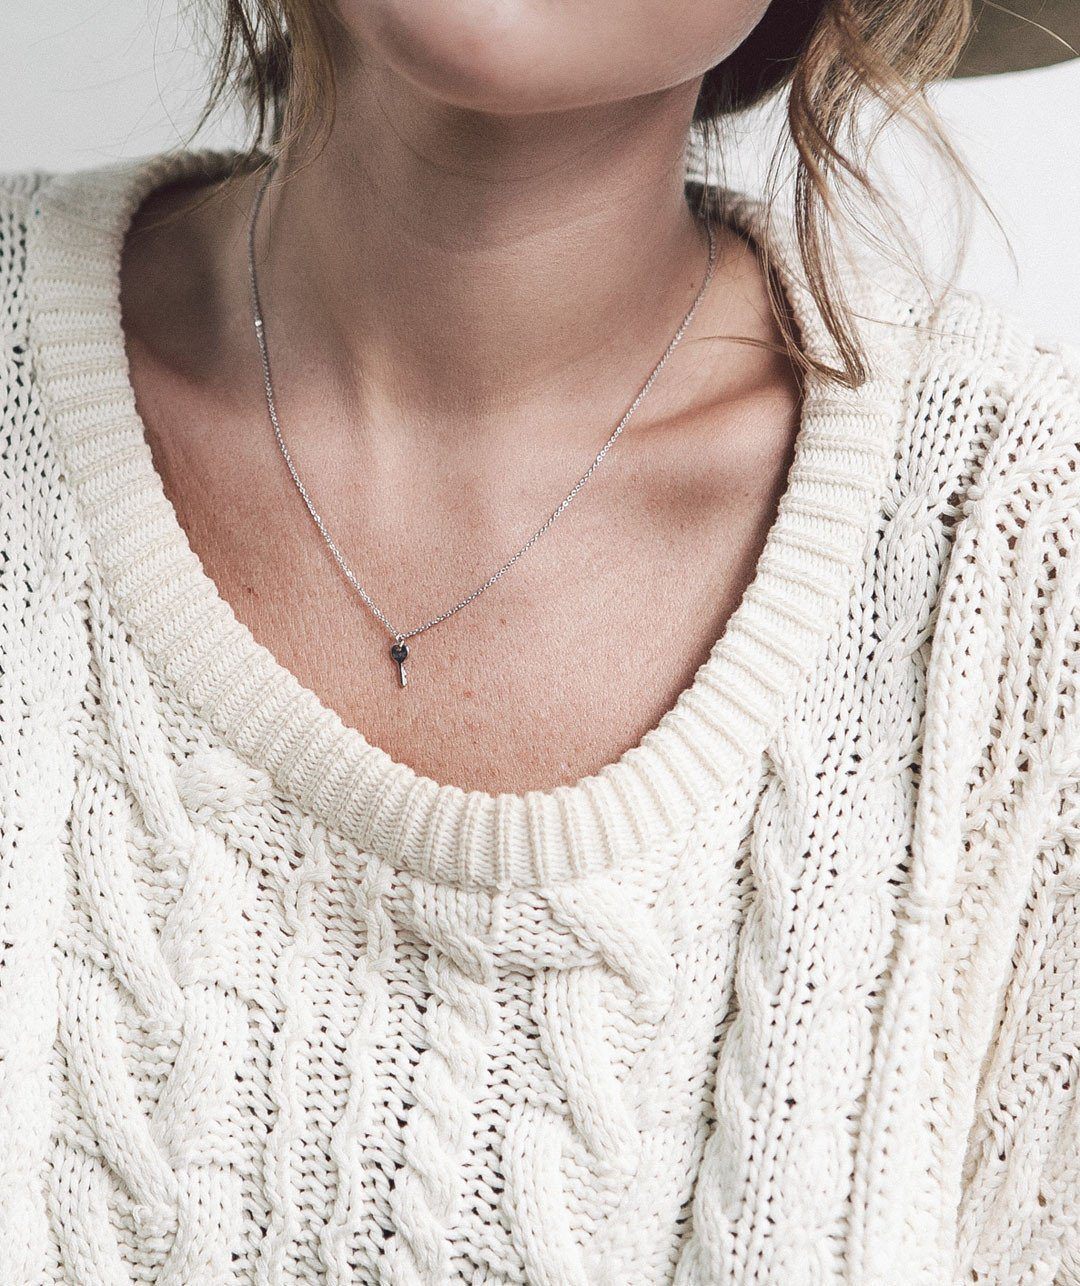 Best Friend Mini Key Necklace Sets Necklaces The Giving Keys LOVE Silver | Lifestyle